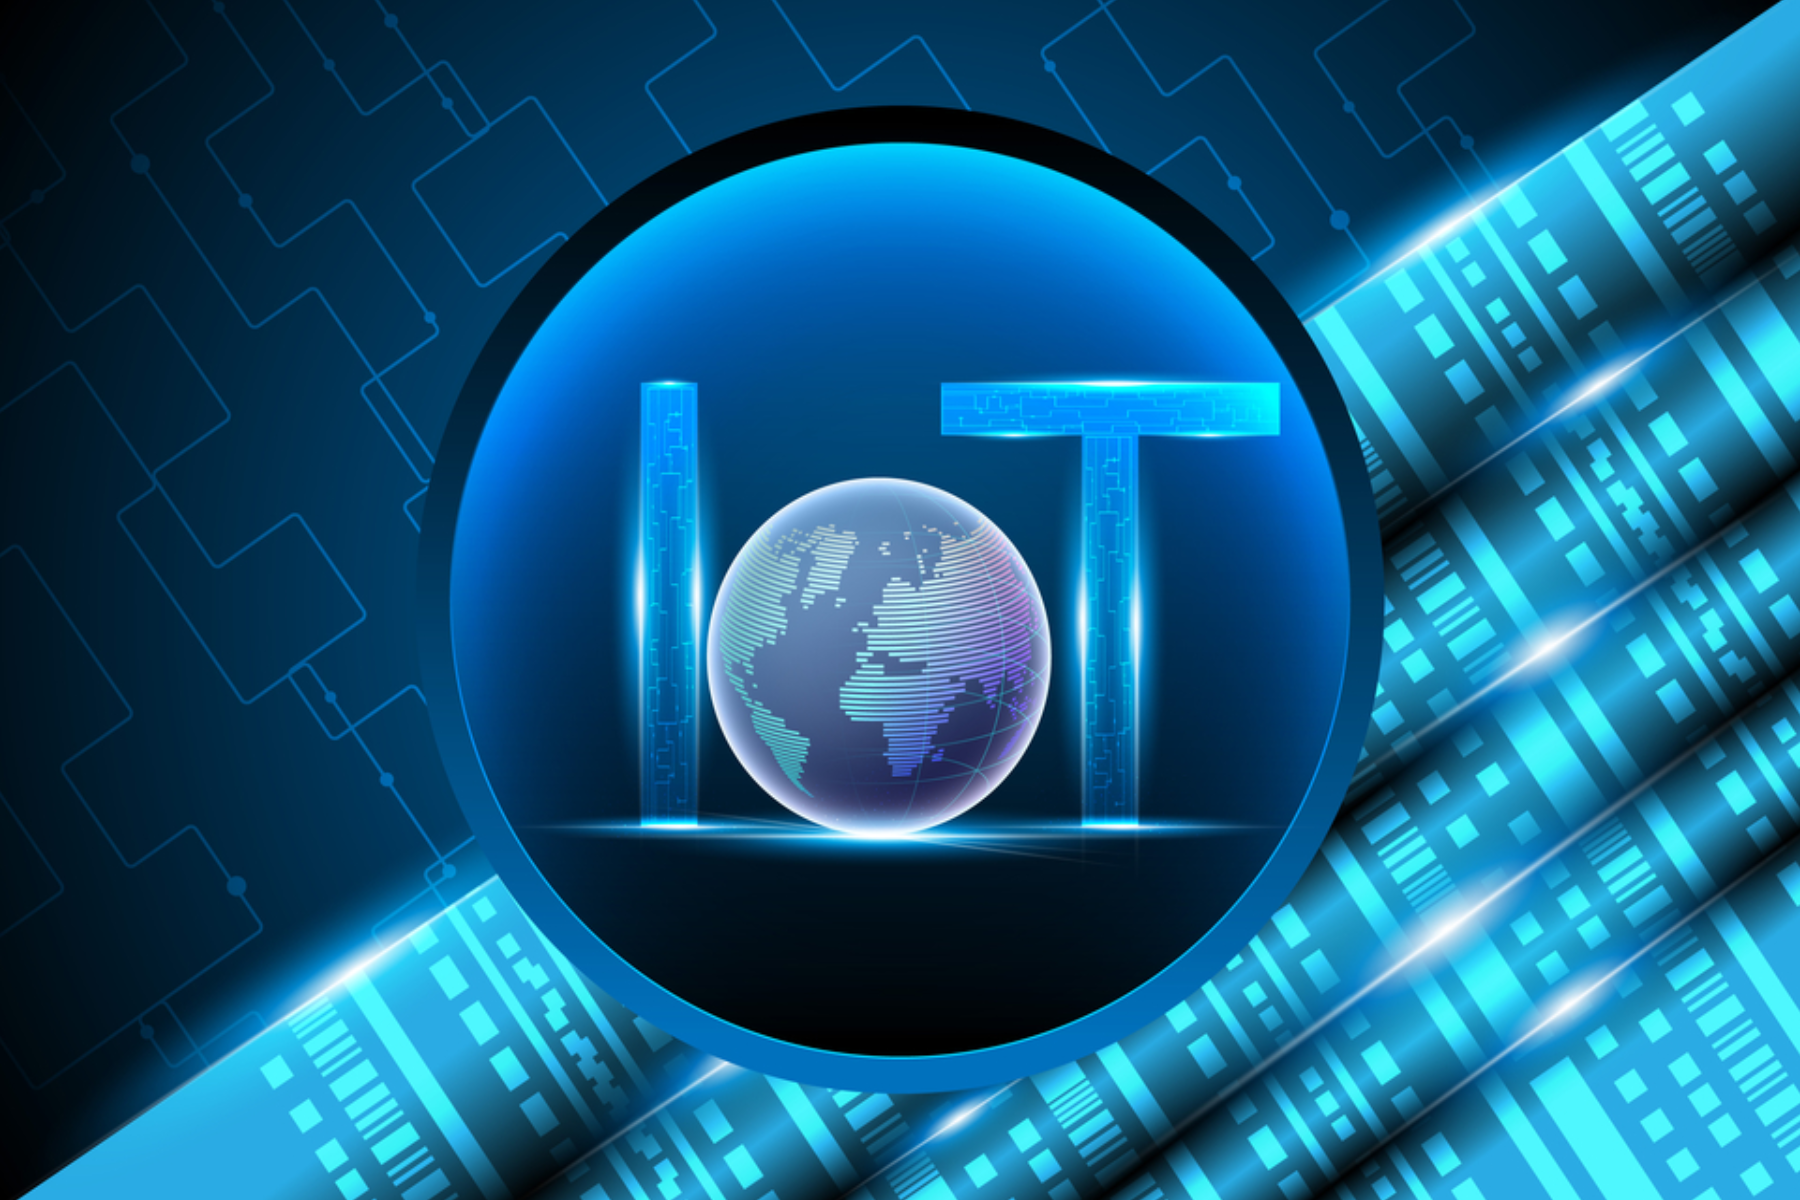 A circular shape featuring the IoT logo